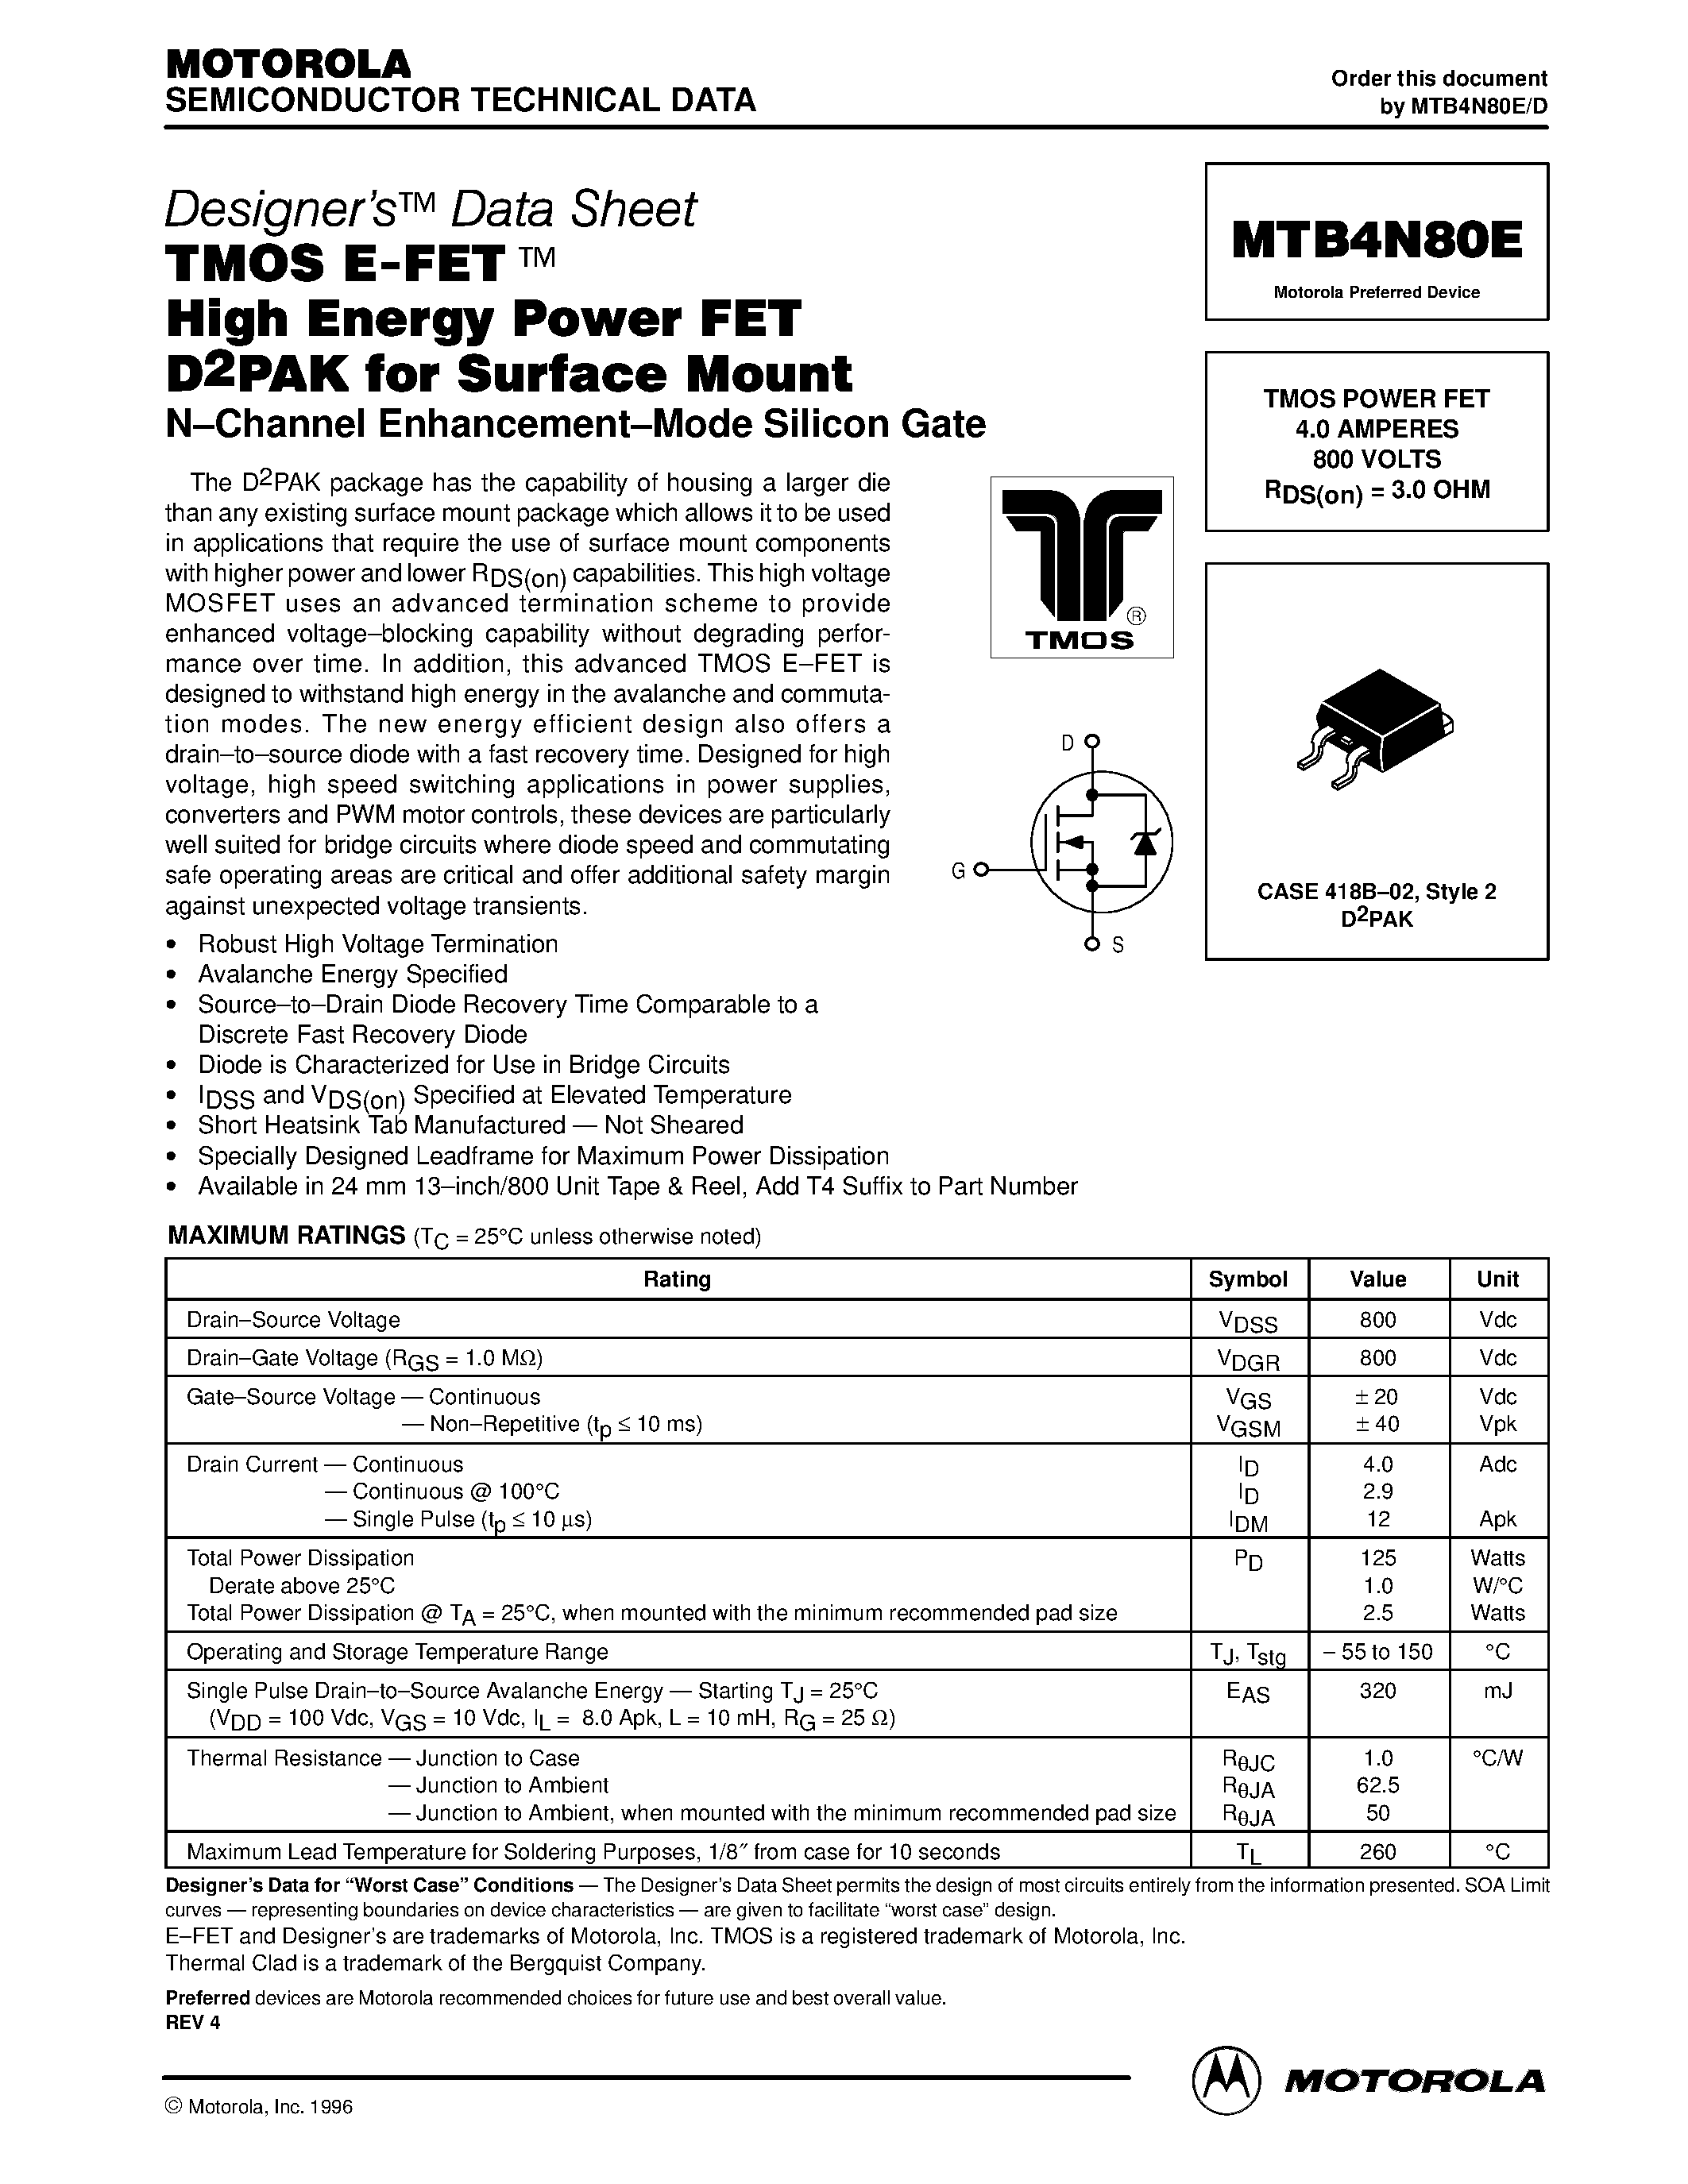 Даташит MTB4N80E - TMOS POWER FET 4.0 AMPERES 800 VOLTS страница 1